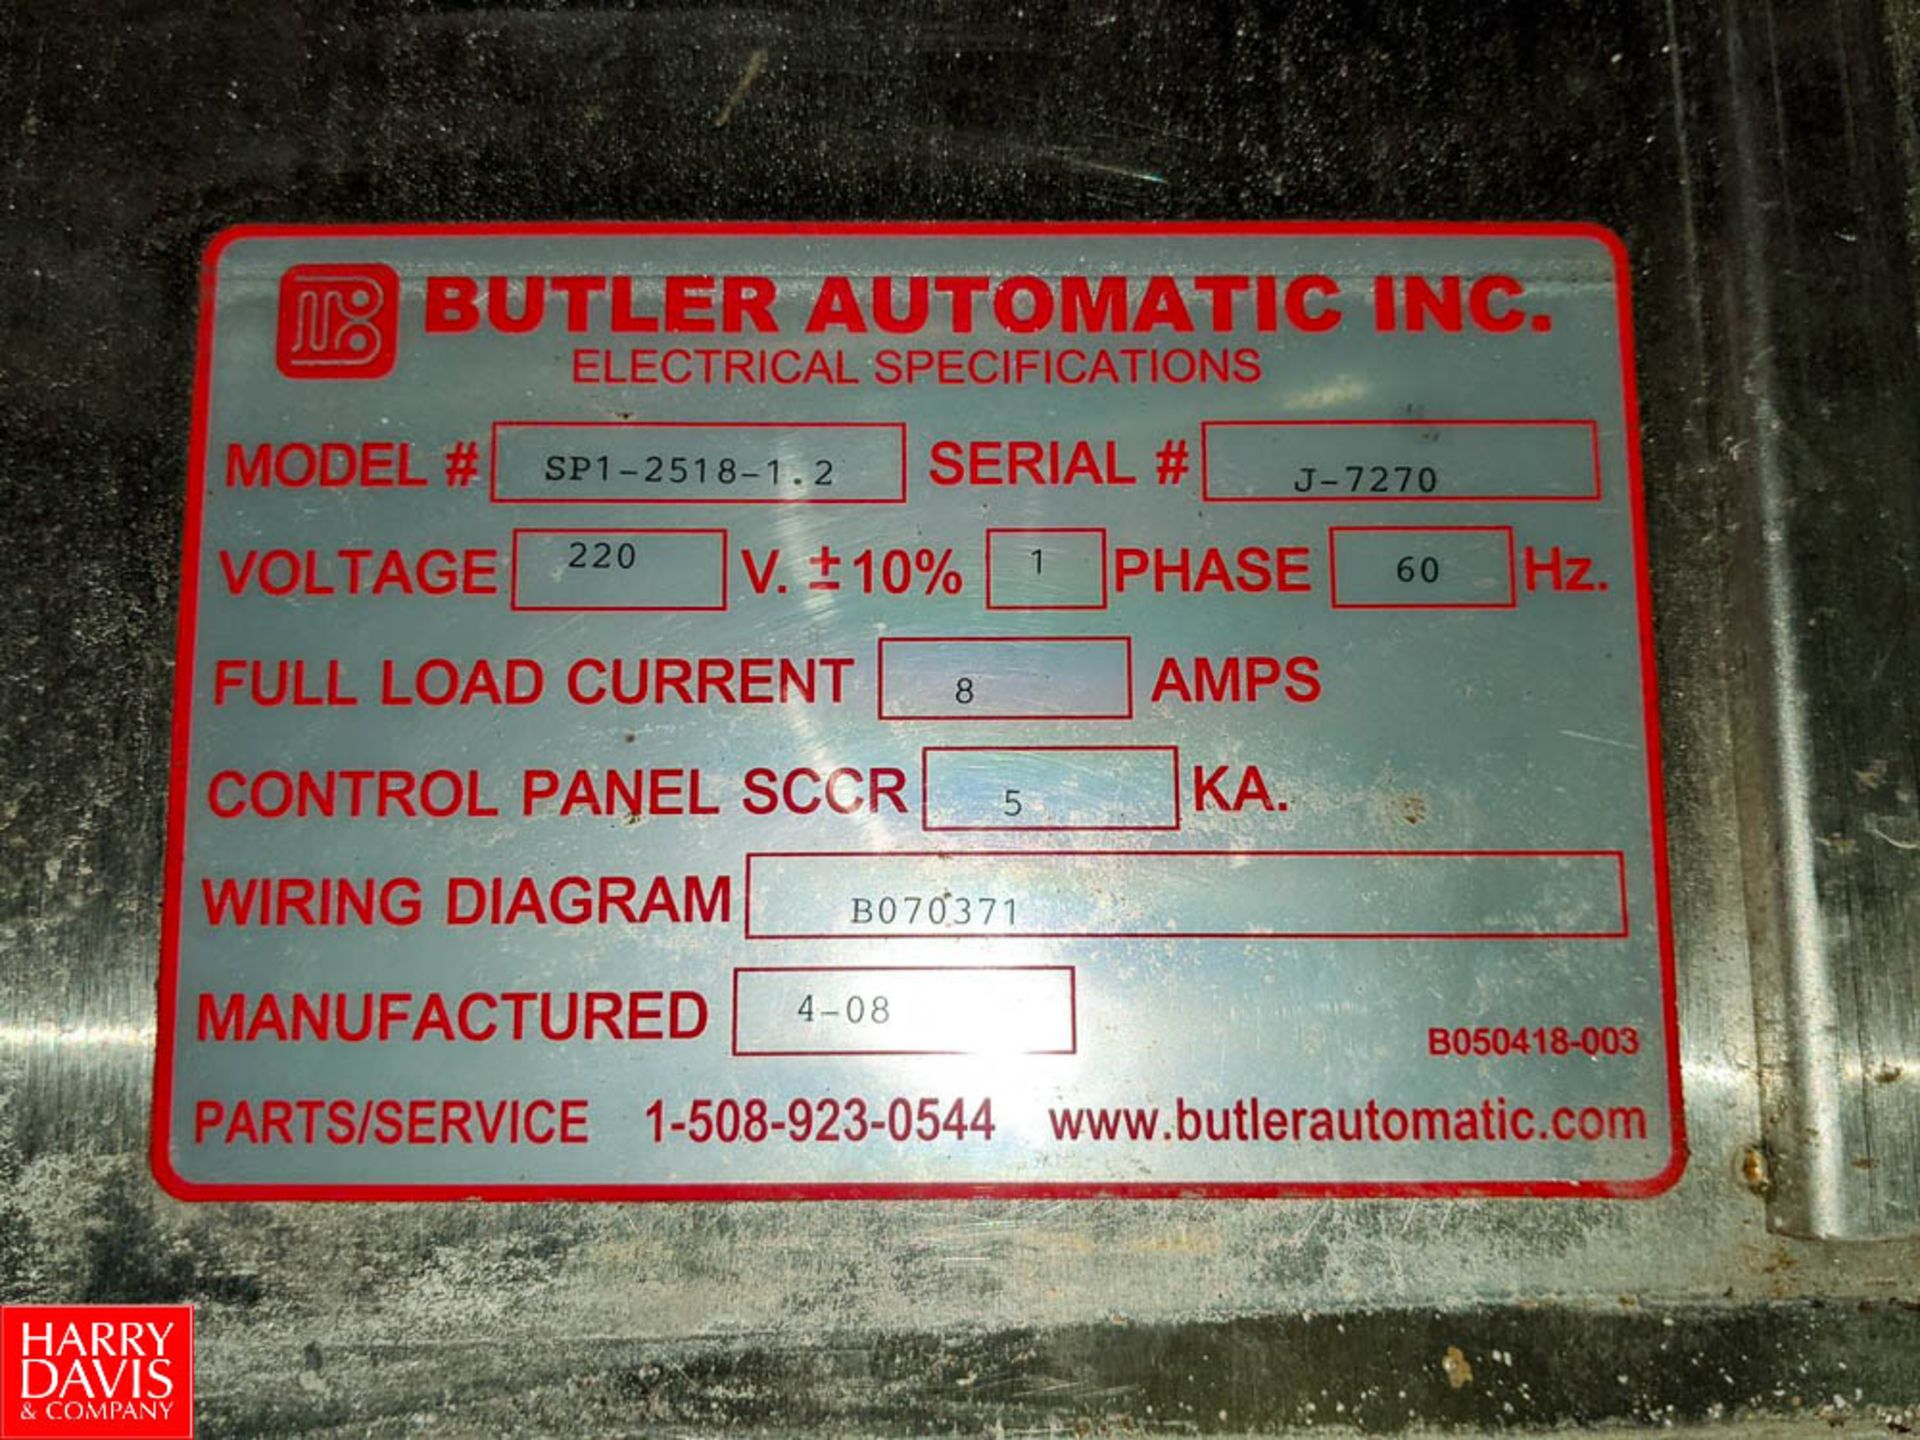 2008 Butler Automatic Inc. Automatic Film Splicer Model: SP1-2518-1.2 SN: J-7270 (Loc. Basement - Image 2 of 2